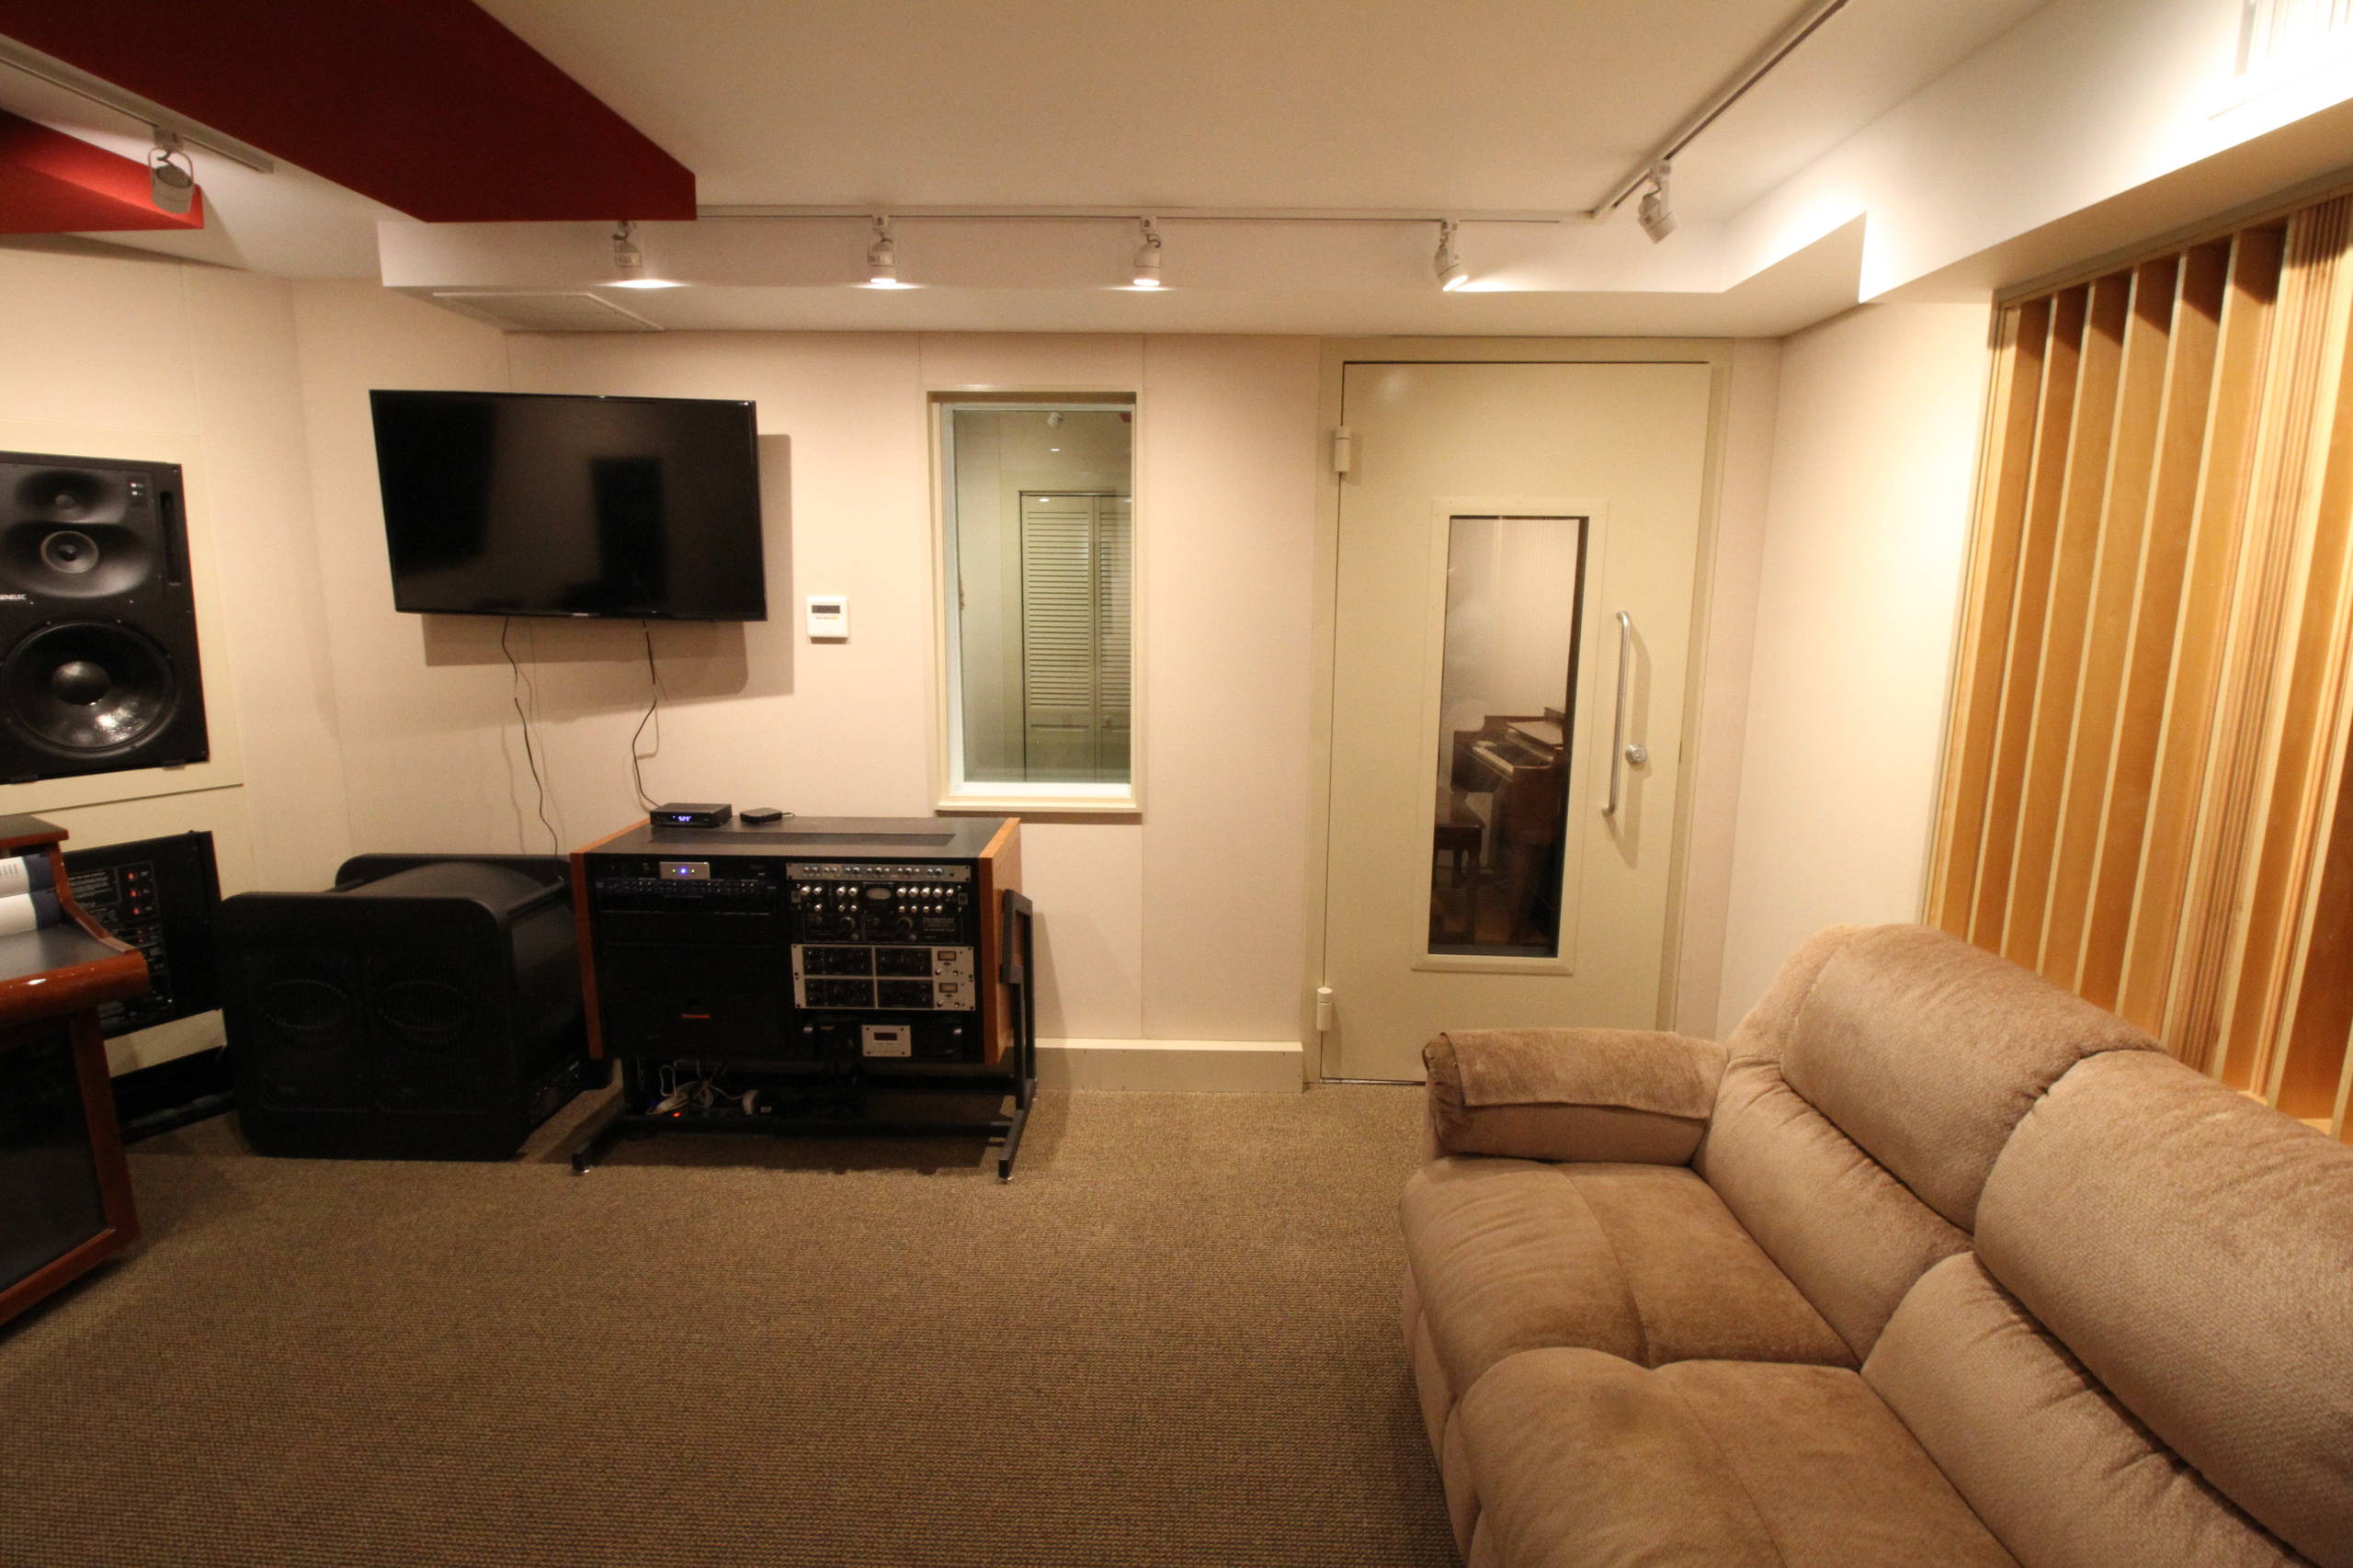 Recording Studio 2